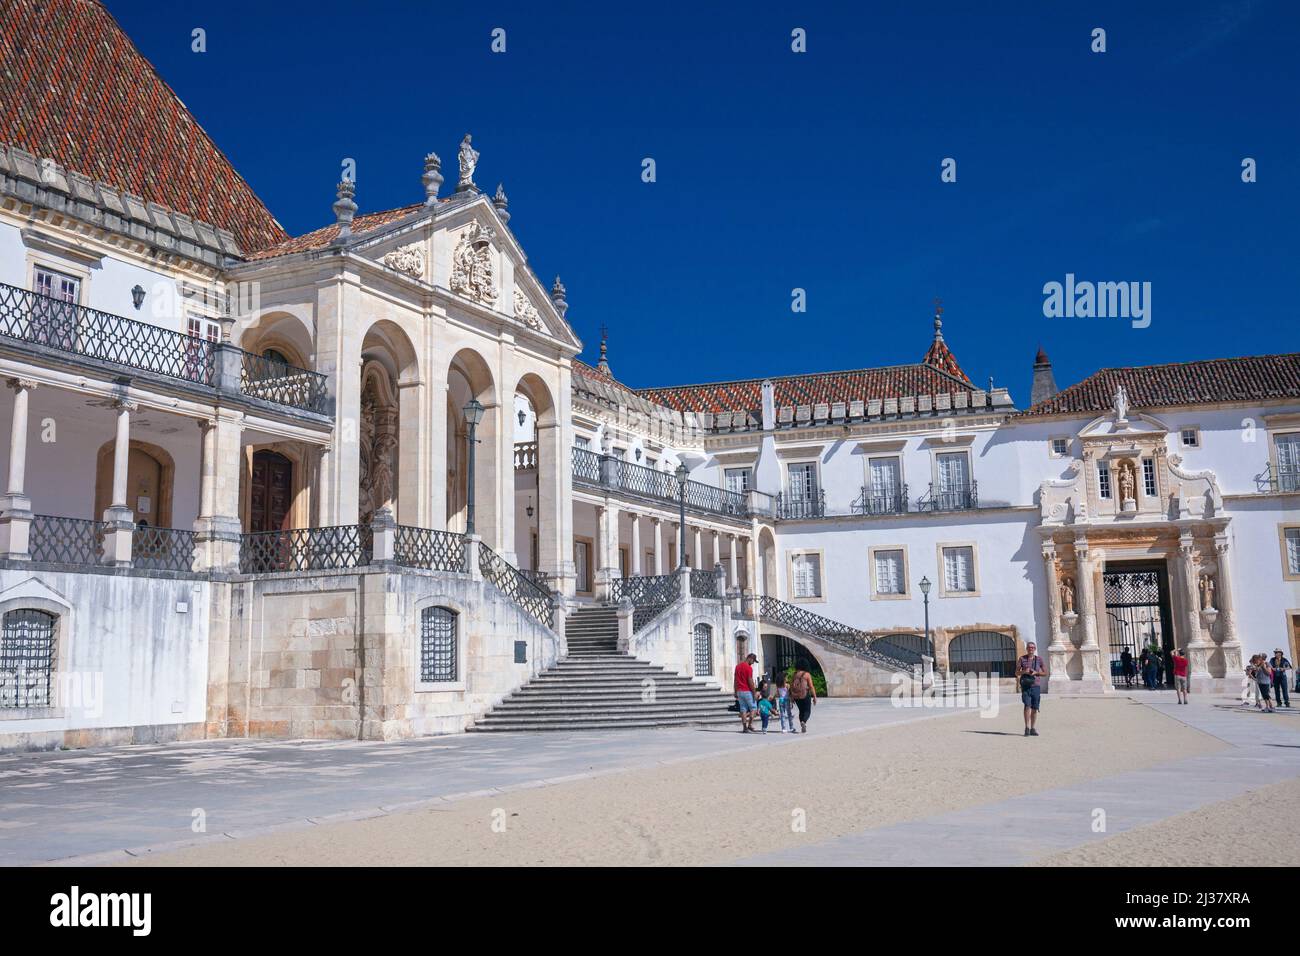 Europe, Portugal, Beira Litoral Province, Coimbra, The Paço das Escolas (Courtyard of the University of Coimbra) and The Via Latina or Royal Palace. Stock Photo